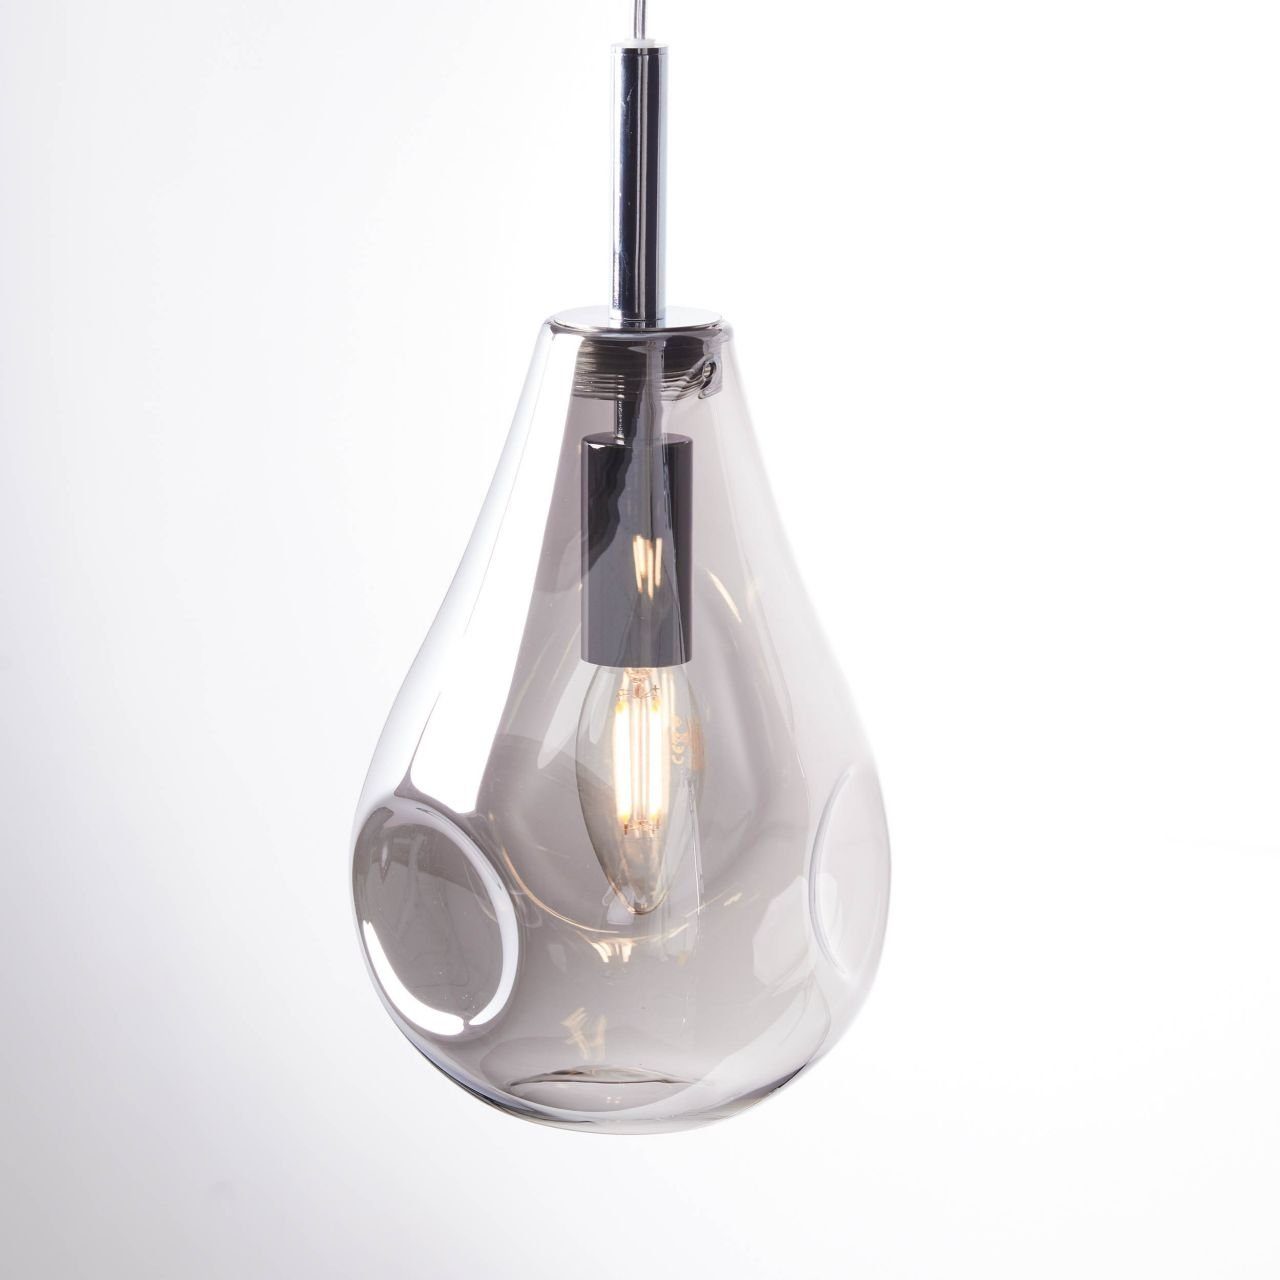 Drops Pendelleuchte Lampe, 1x 1flg Drops, rauchglas/chrom, Pendelleuchte Brilliant Glas/Metall, D45